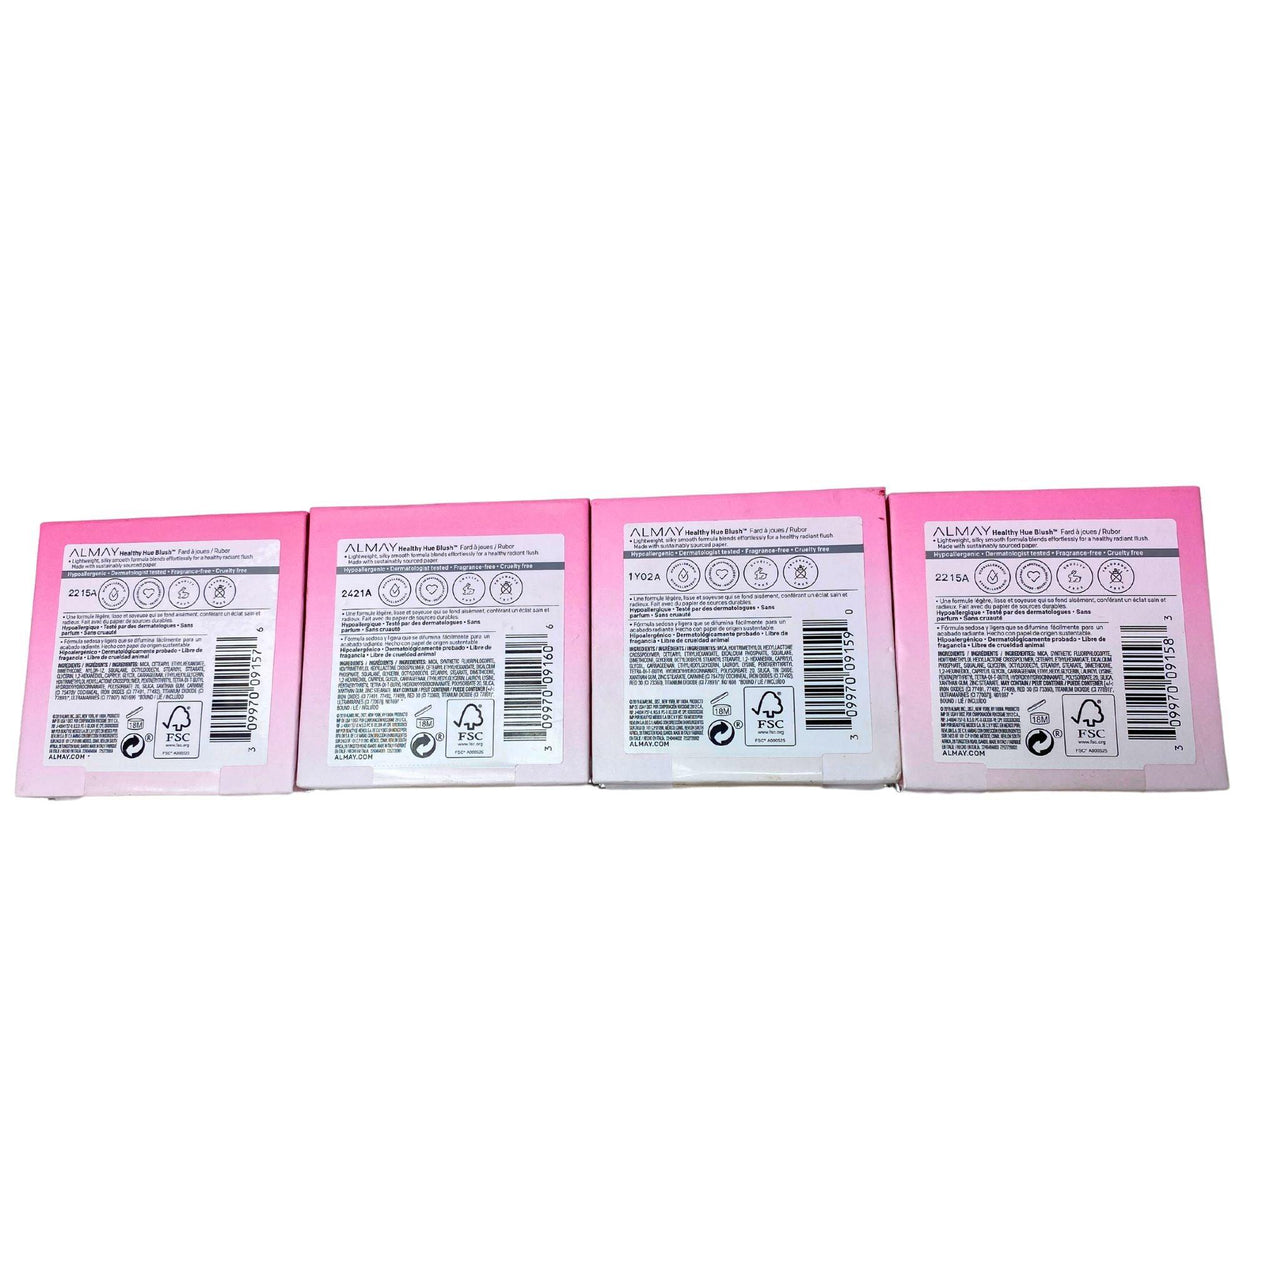 Almay Healthy Hue Pressed Powder Blush Assorted Colors 0.17oz/5g (50 Pcs Lot) - Discount Wholesalers Inc